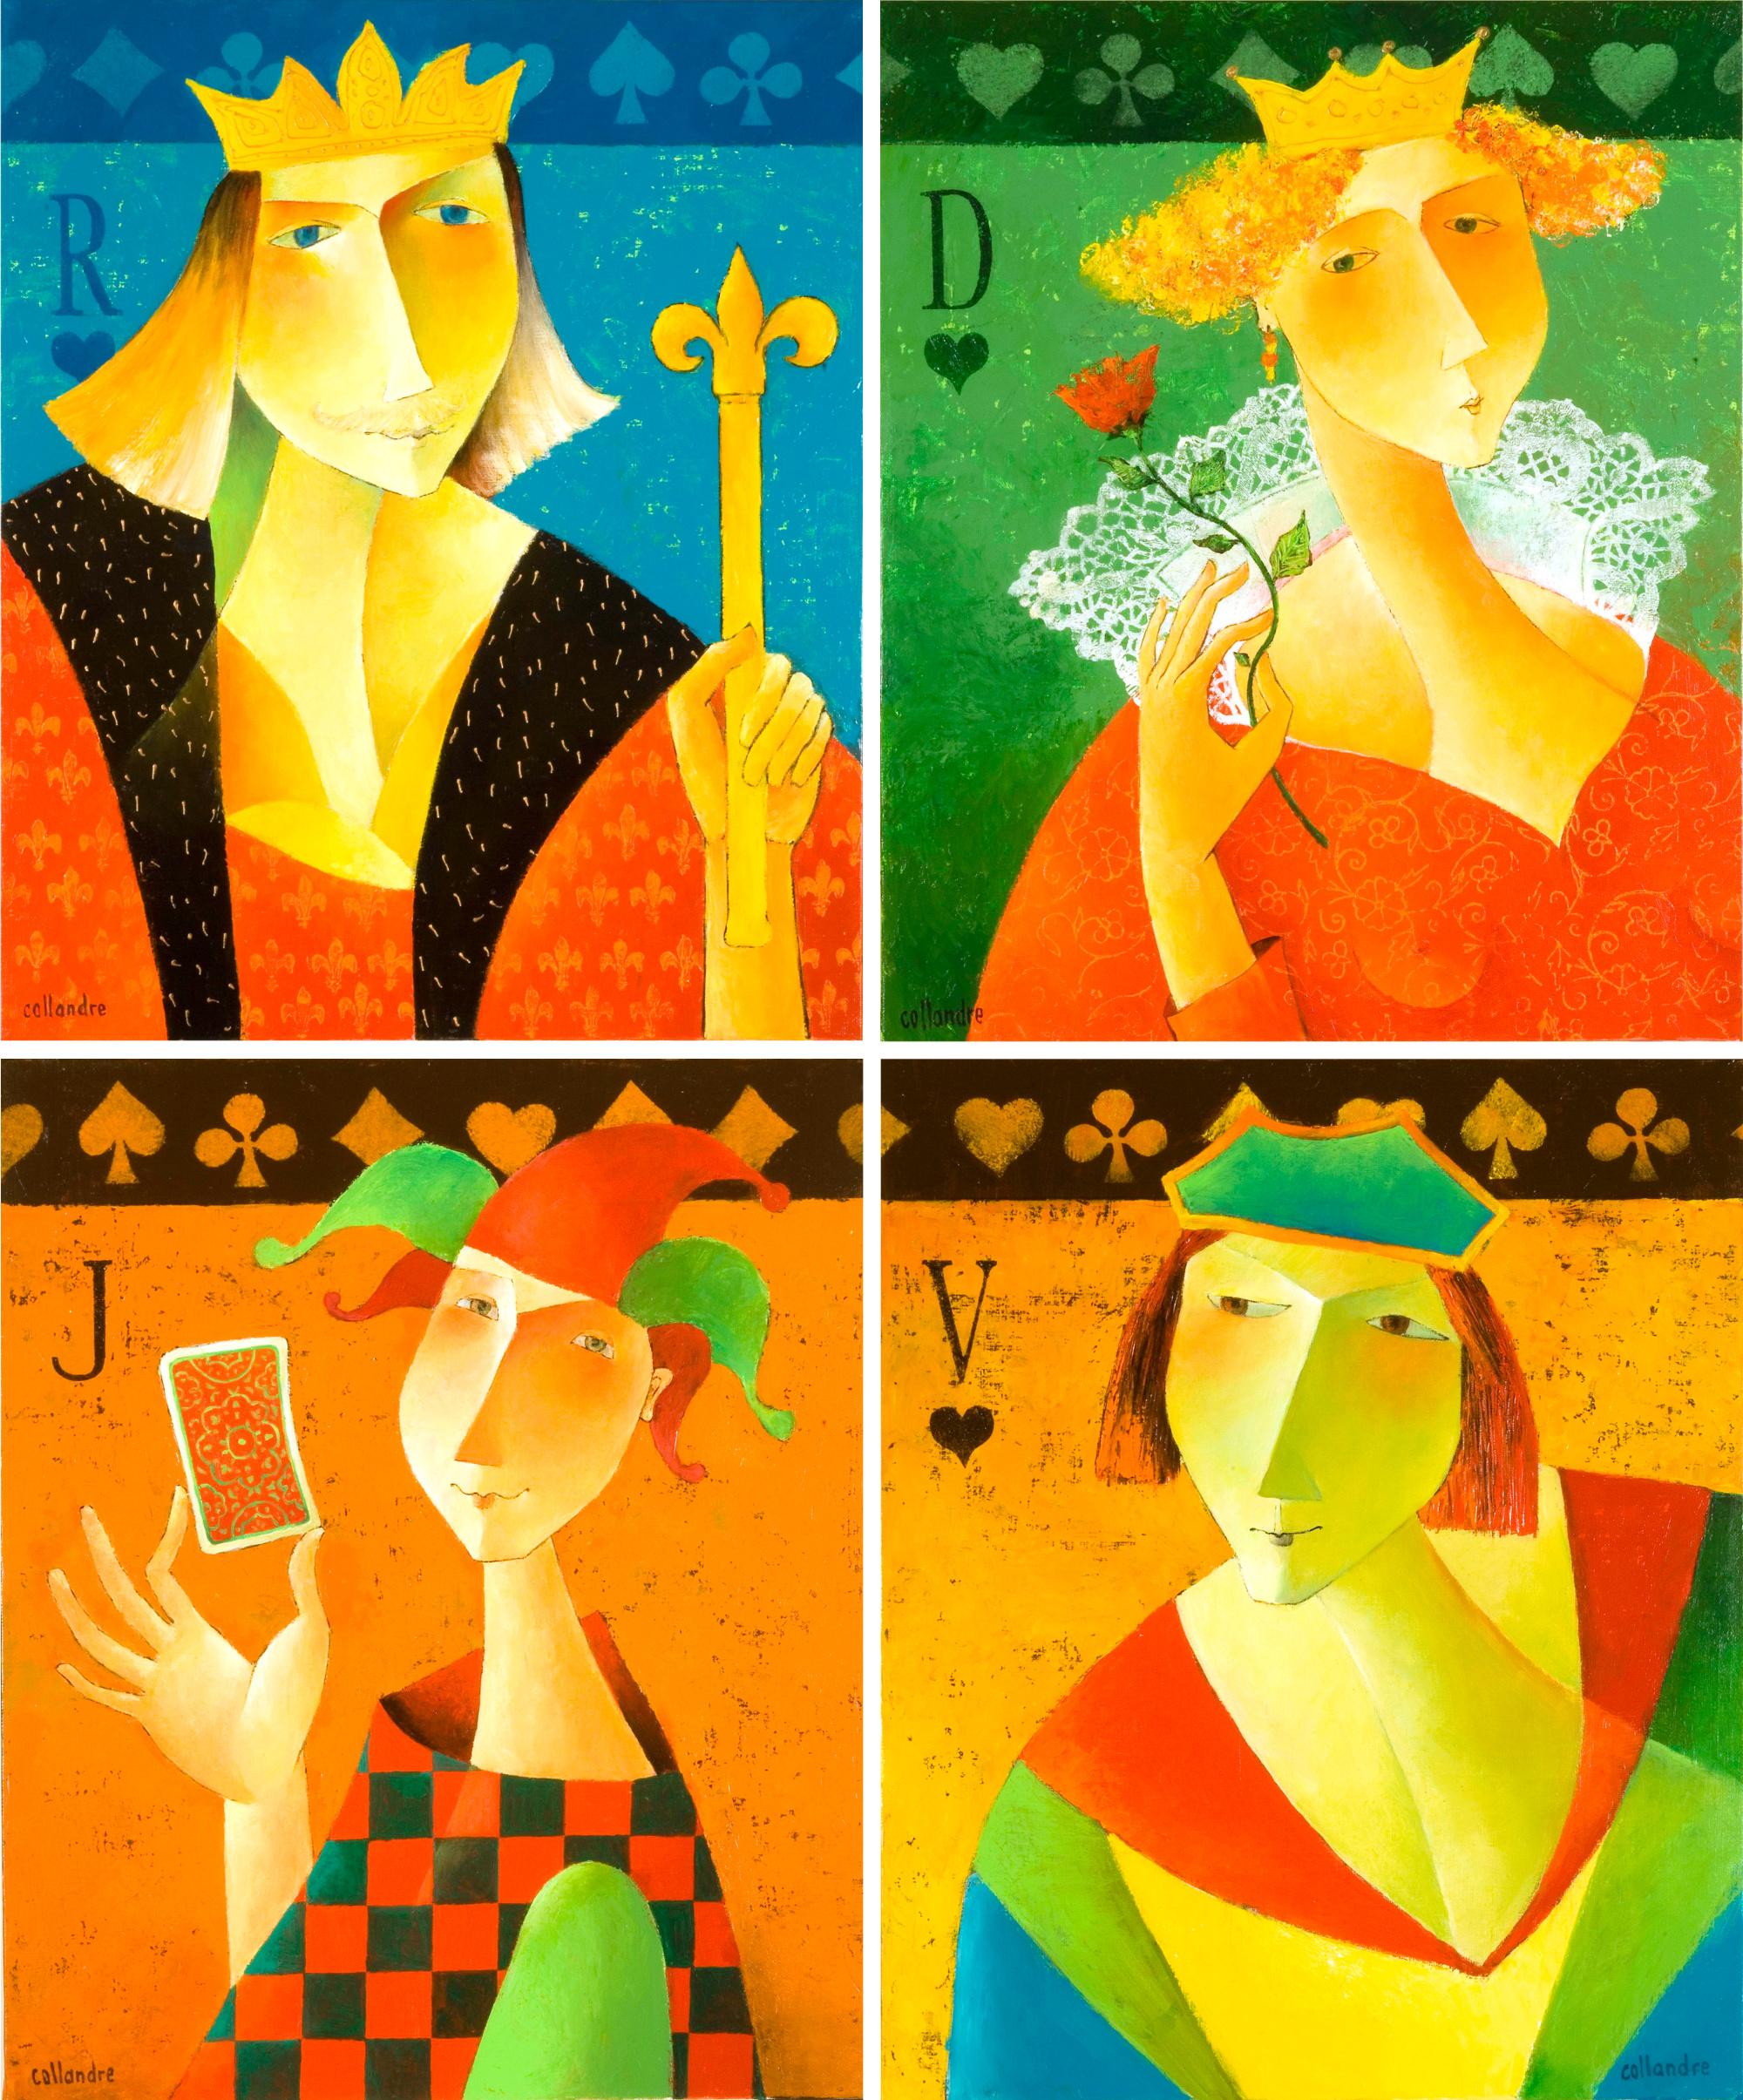 Françoise Collandre Figurative Painting - "Cards", Set of 4 Portraits King-Queen-Jack-Joker Figurative Acrylic Painting